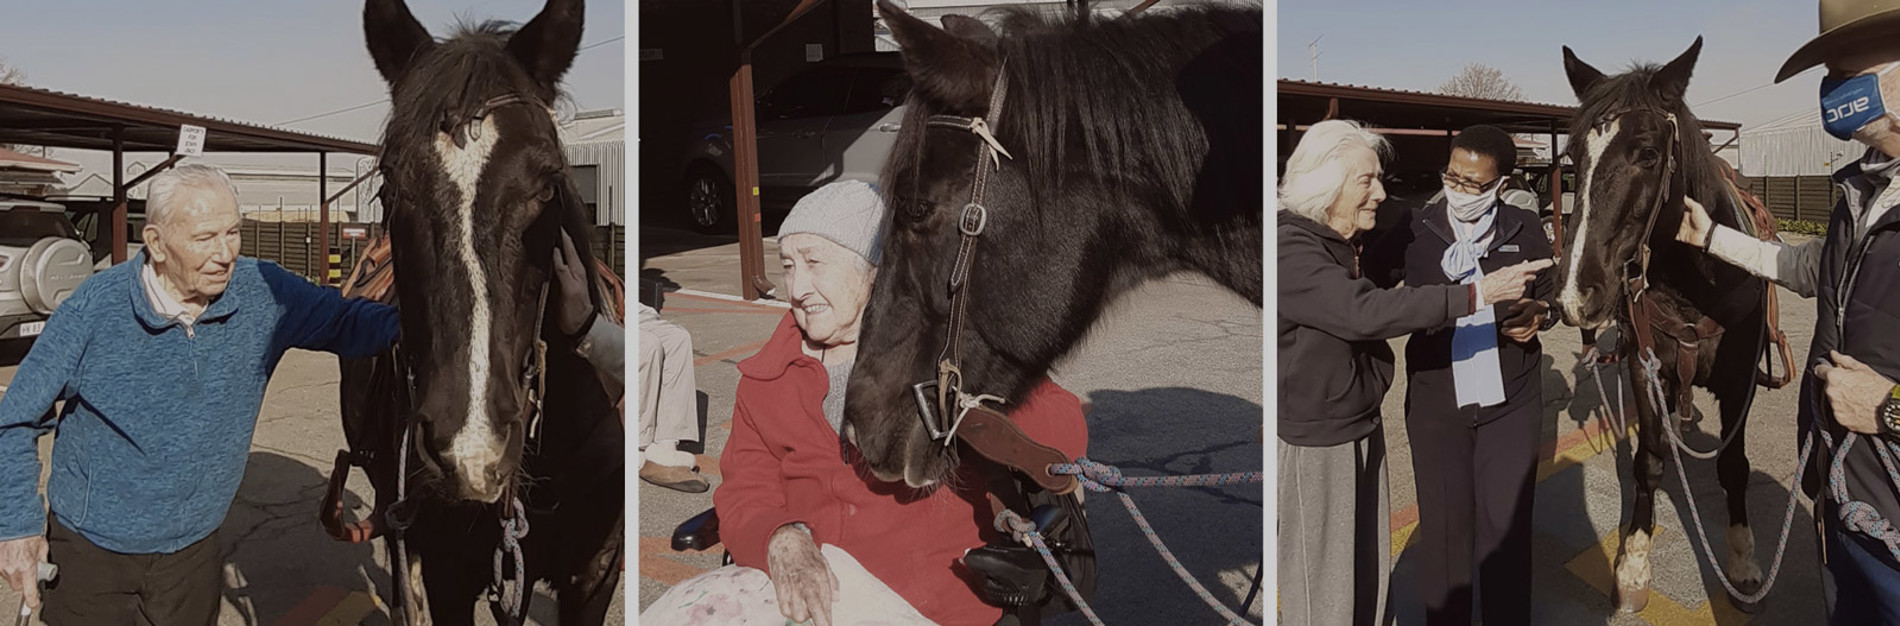 People-taking-care-of-horses.jpg